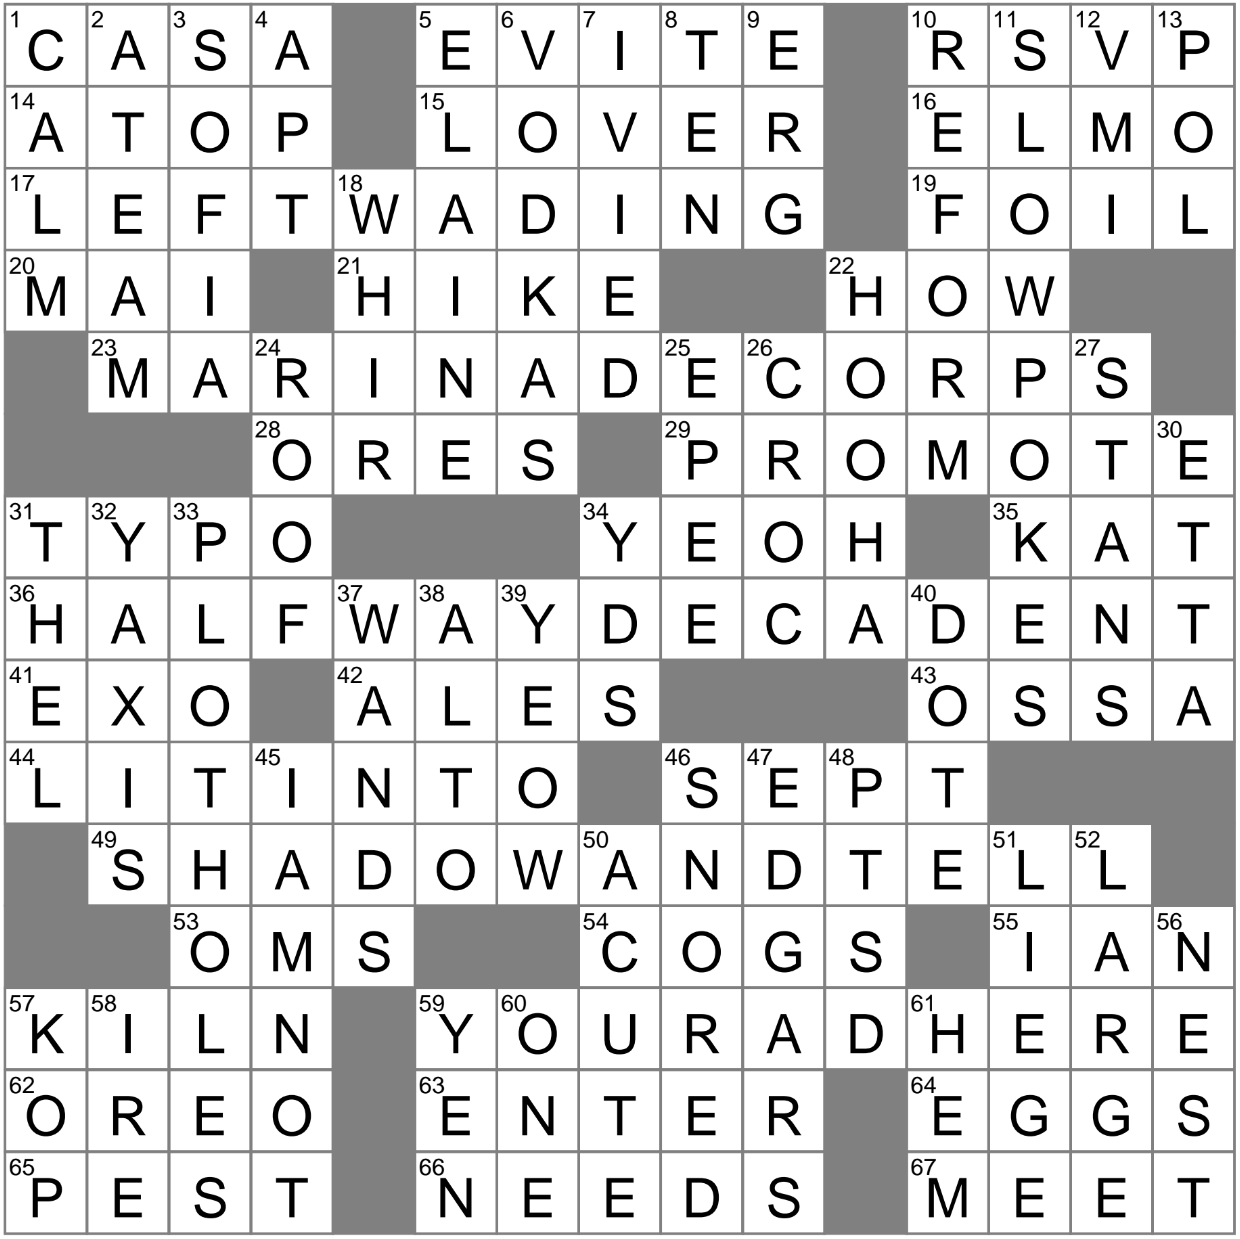 LA Times Crossword 7 Jul 23 Friday LAXCrossword com